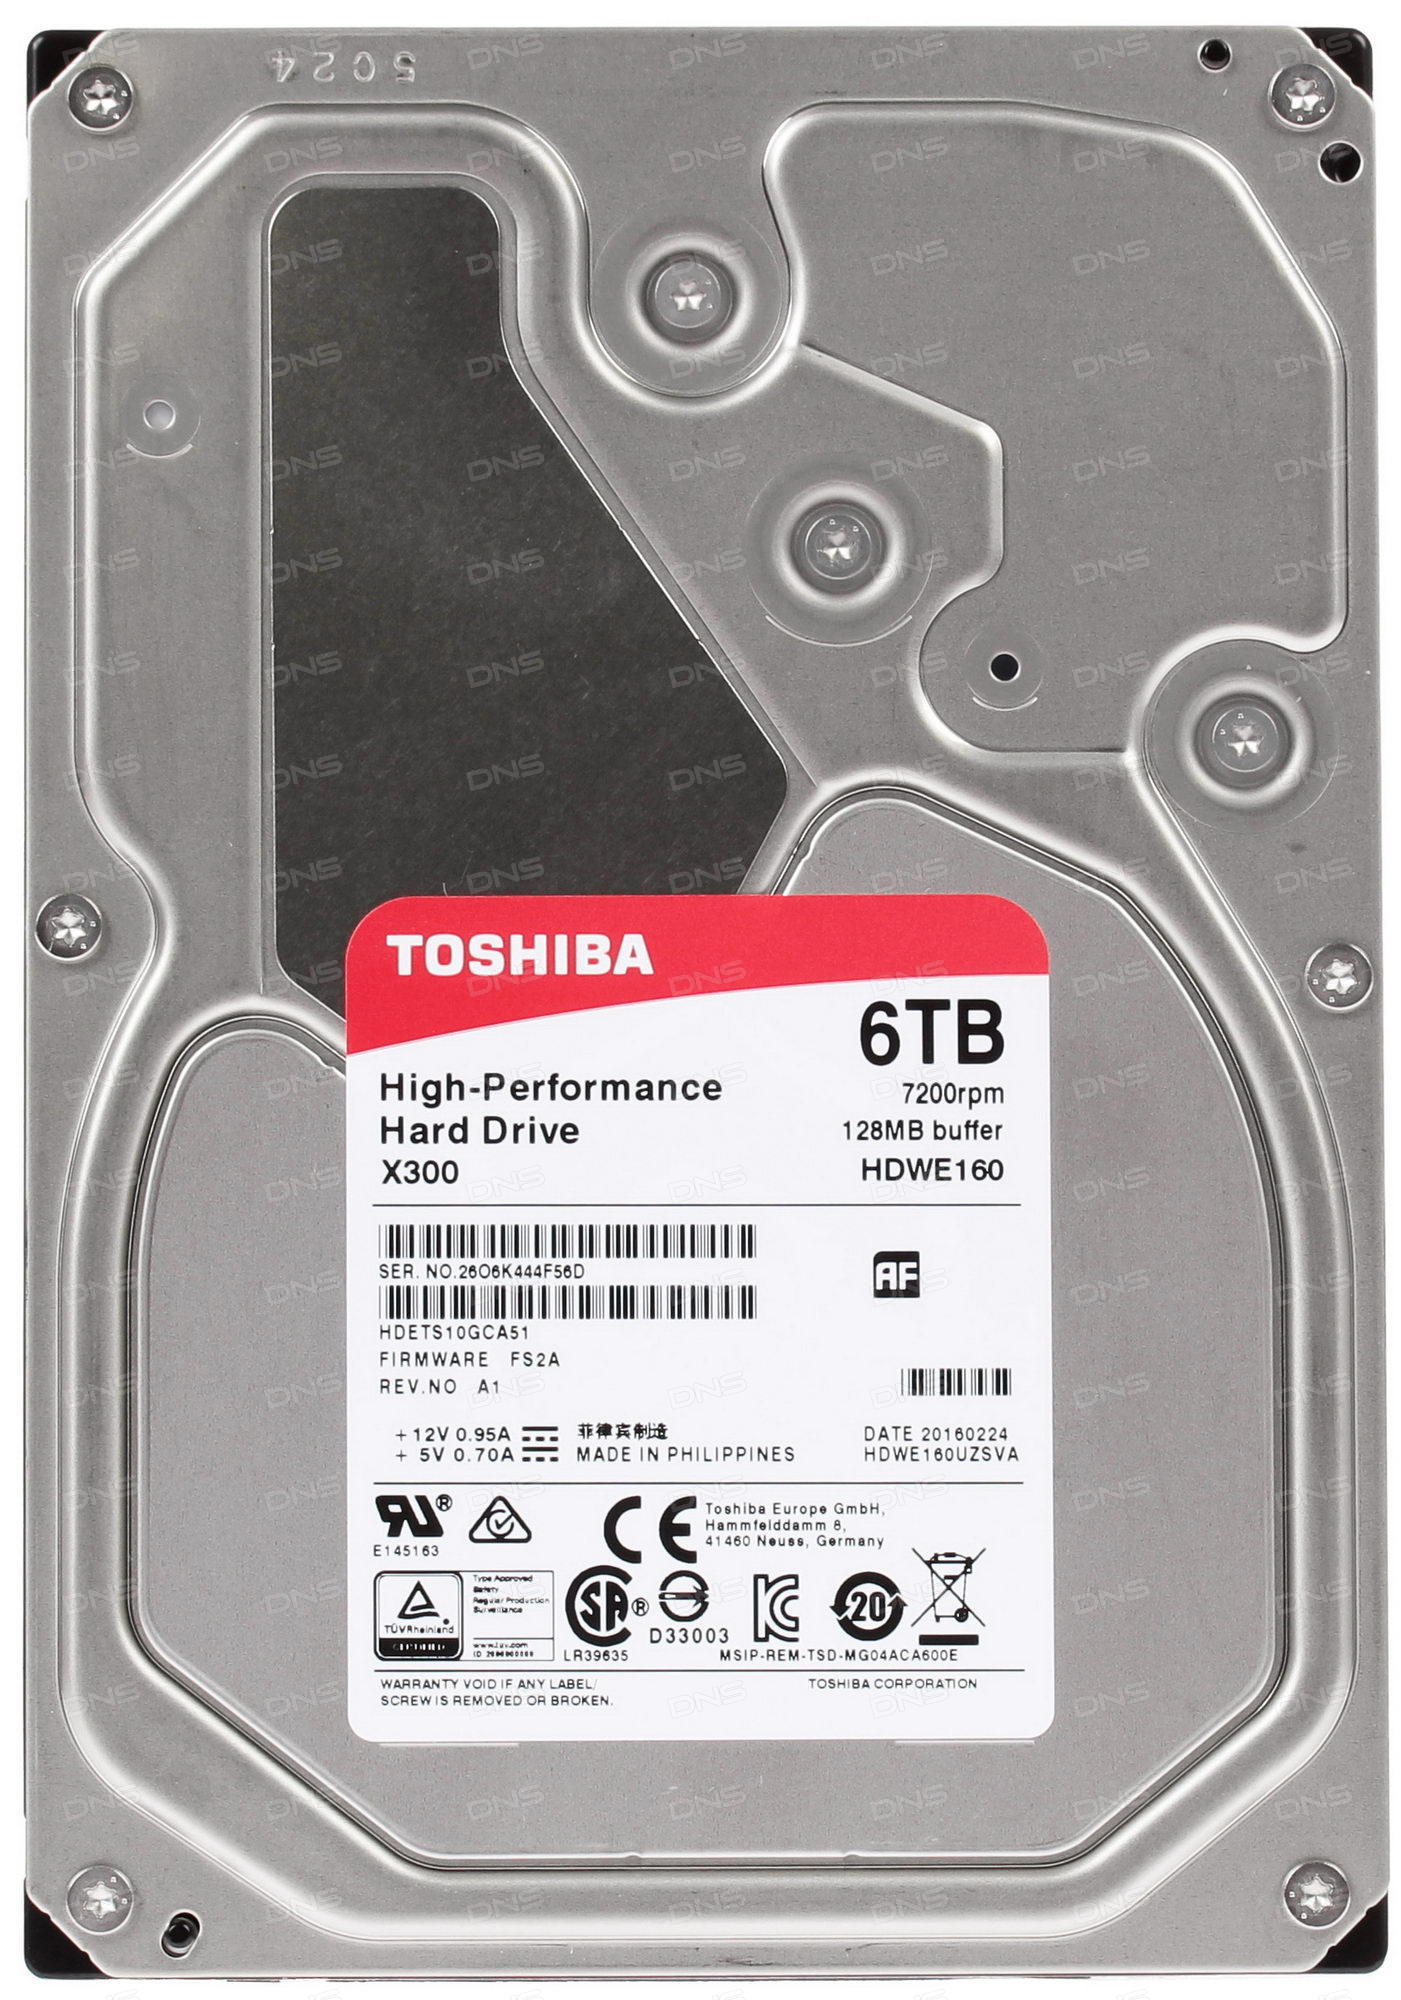 X 300 0. HDD Toshiba 6tb. Toshiba n300 4tb hdwq140uzsva. 3.5" 4tb Toshiba hdwe140uzsva. Toshiba x300 6tb hdwe160uzsva.